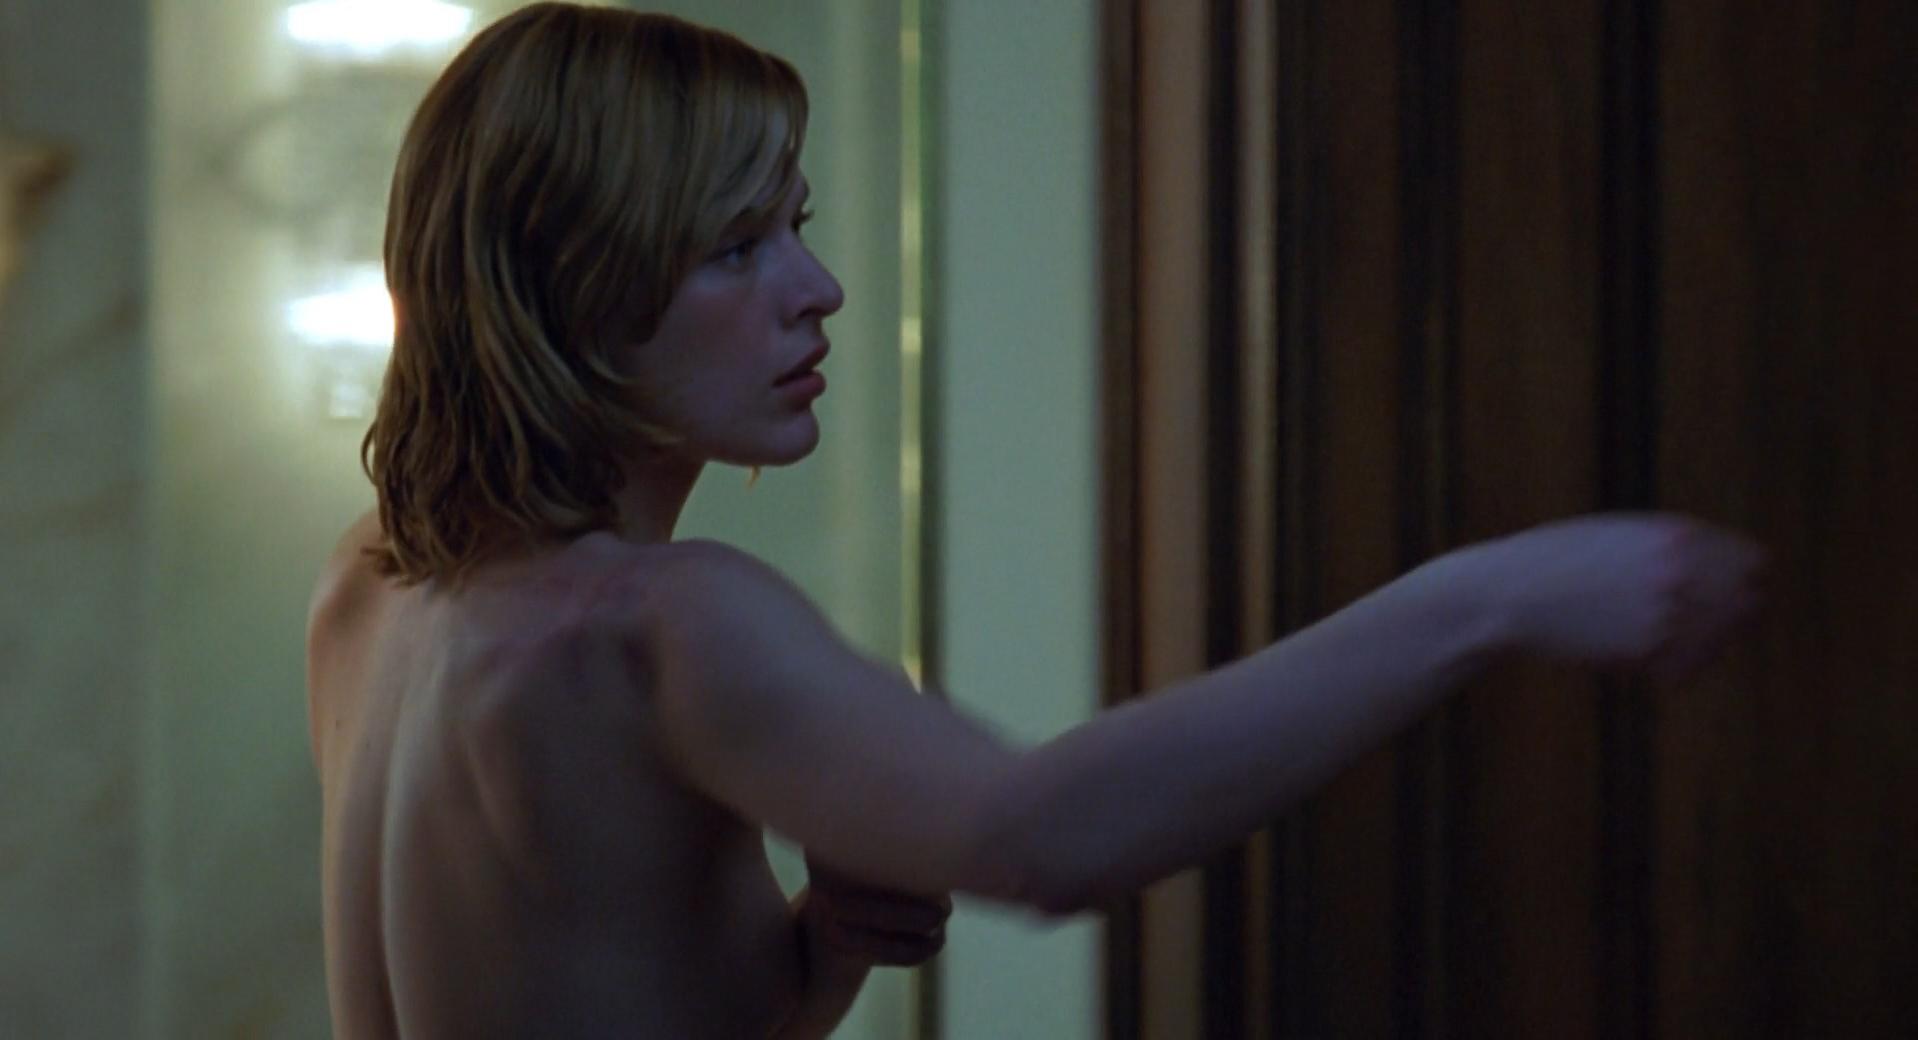 Milla jovovich resident evil naked